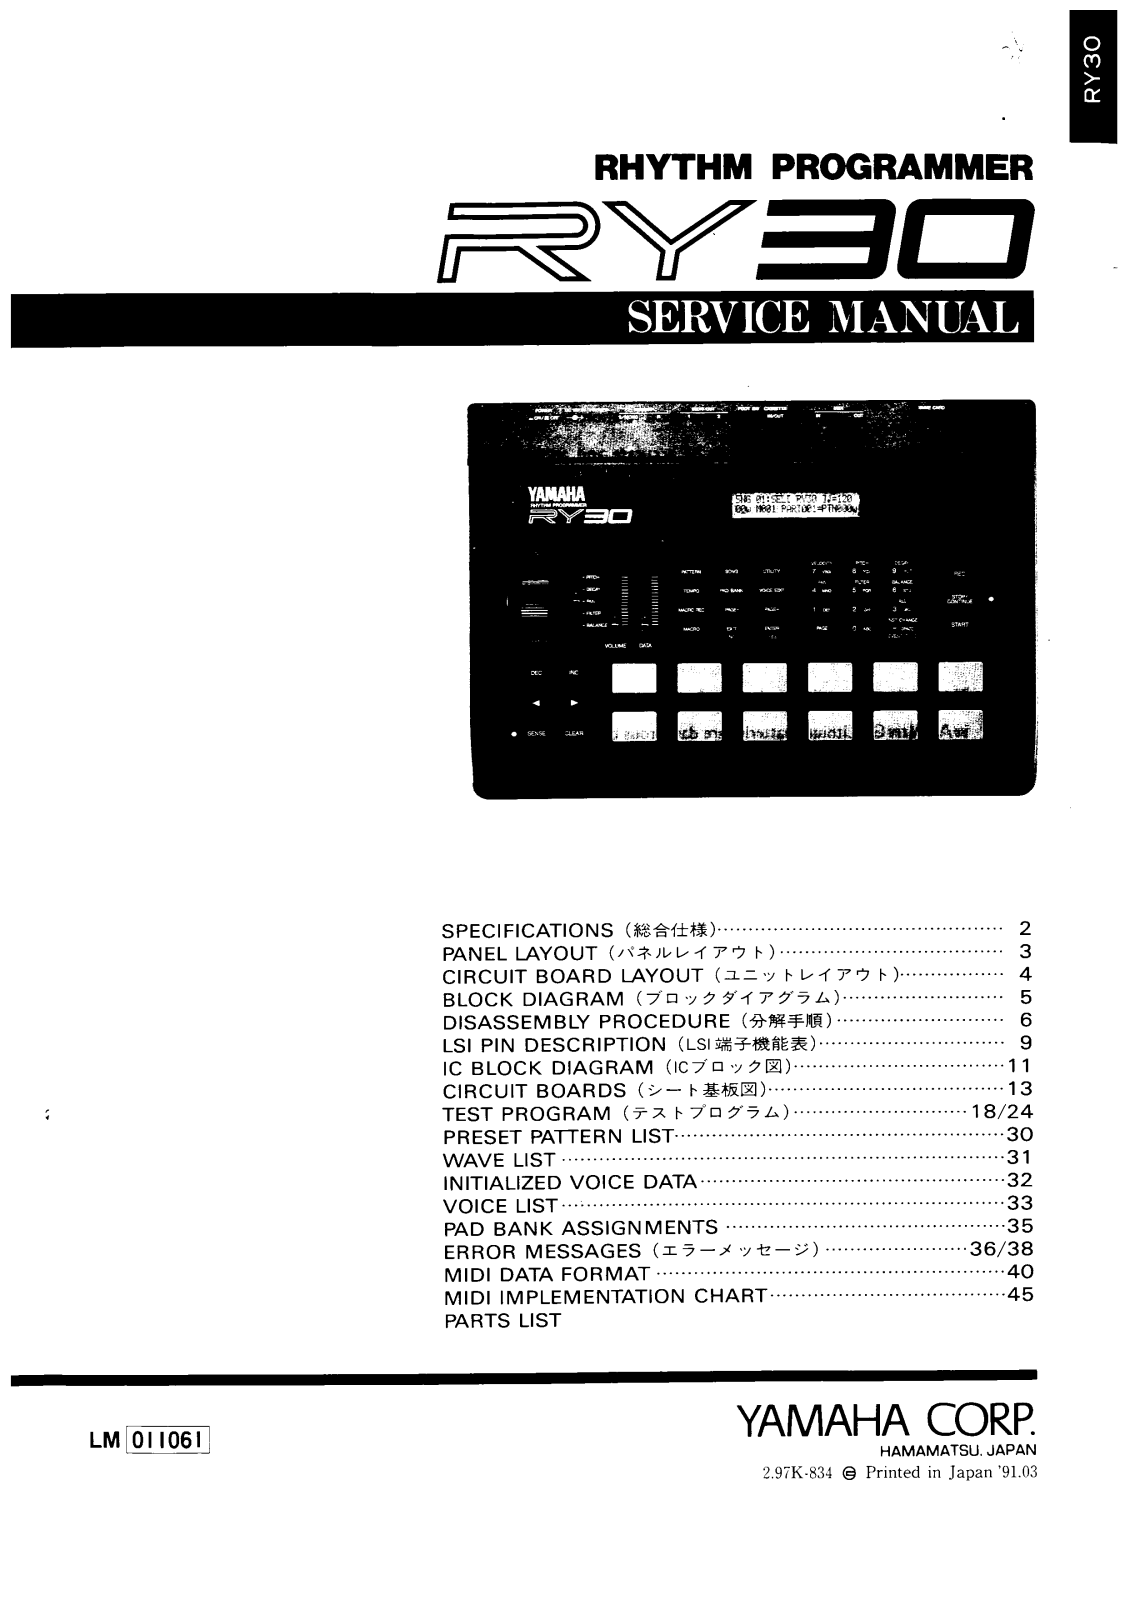 Yamaha RY-30 Service Manual